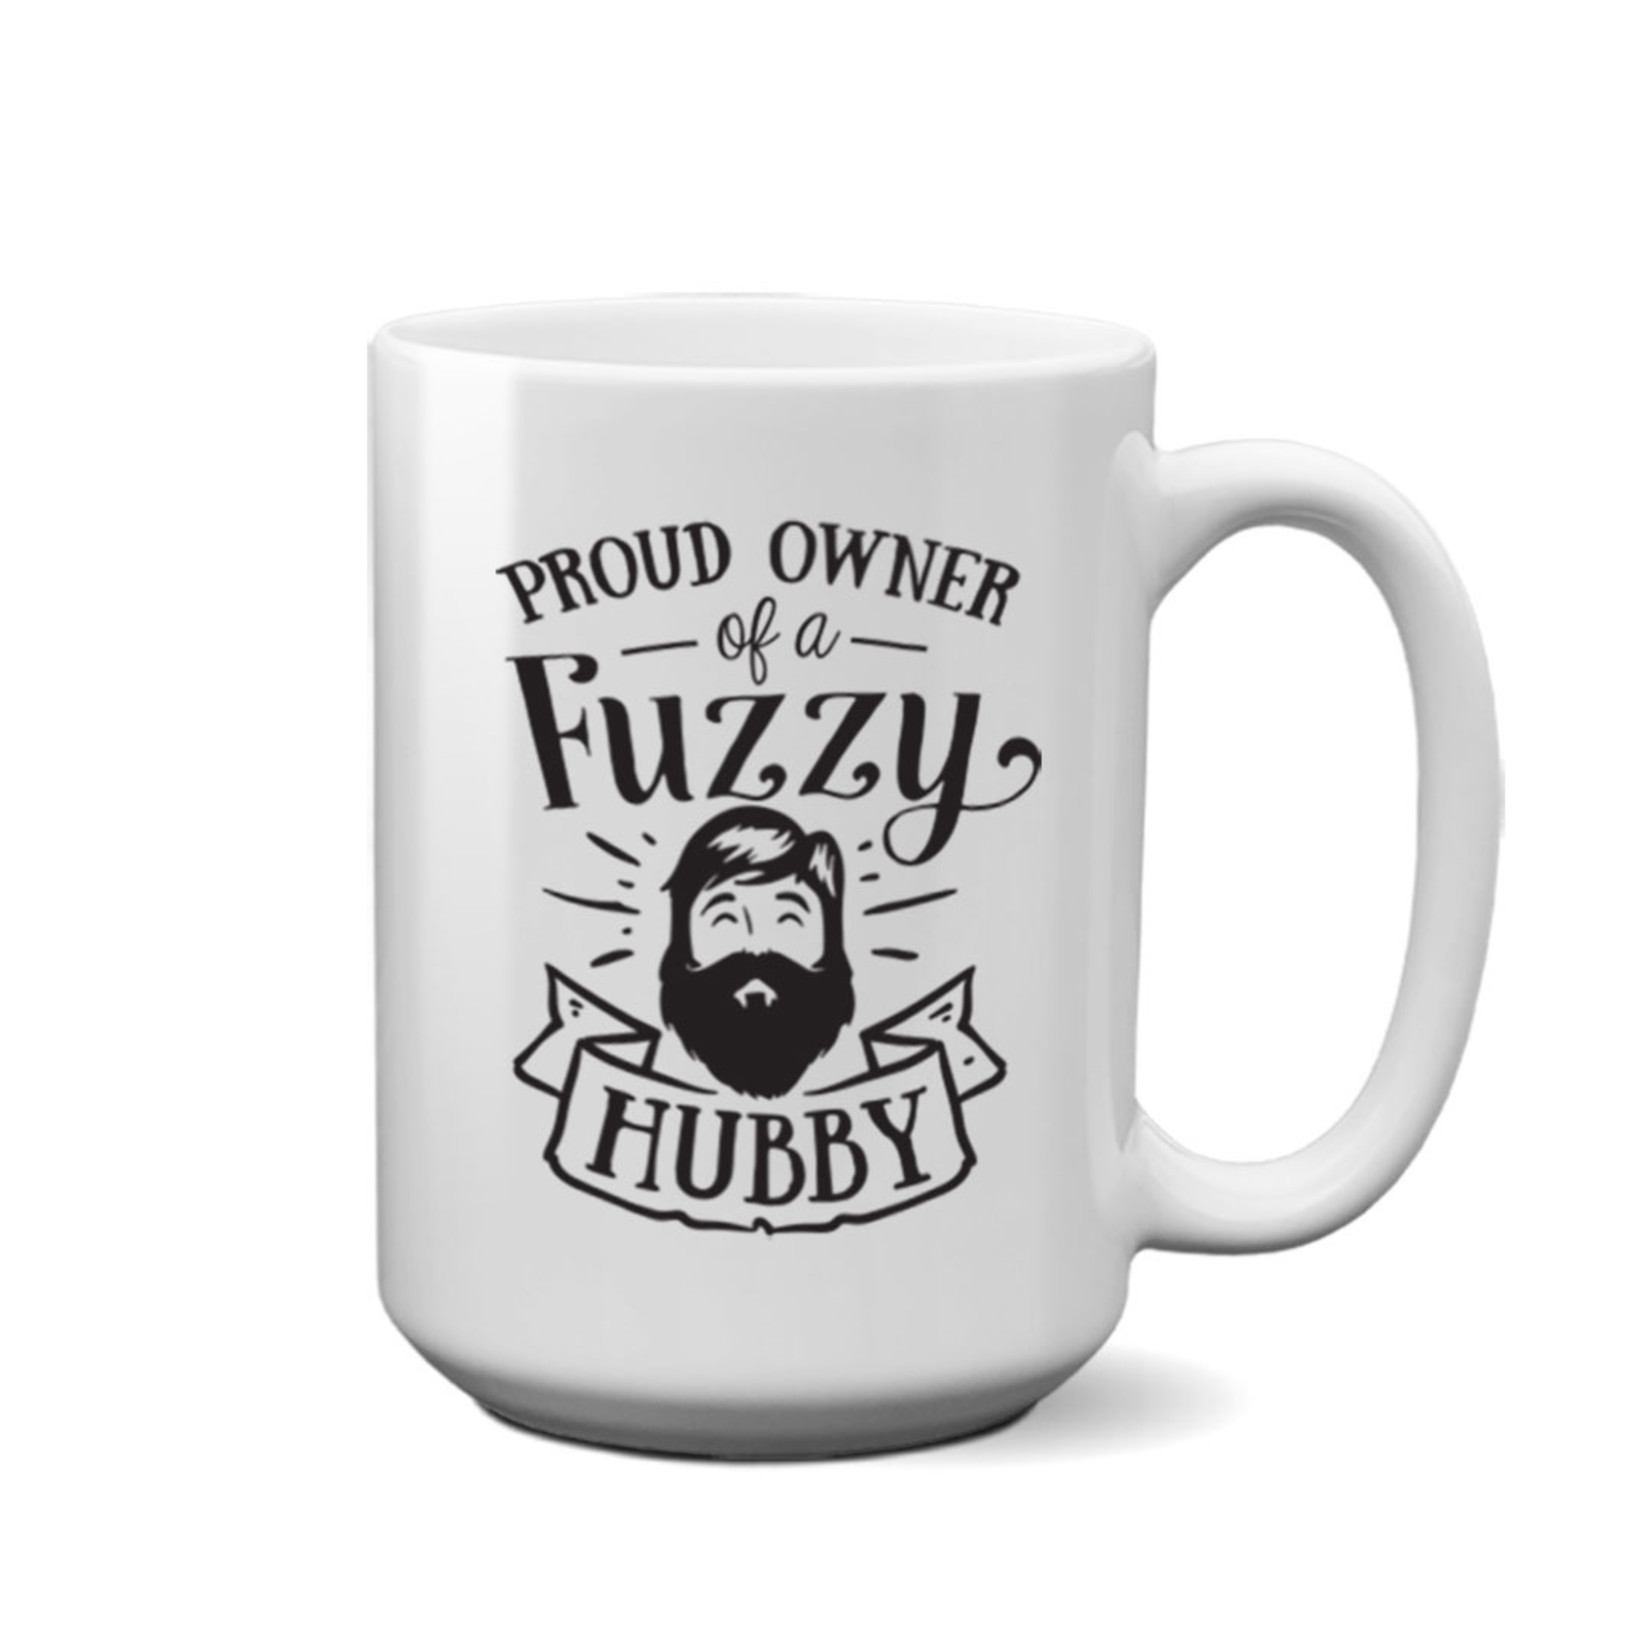 Mug - Fuzzy Husband